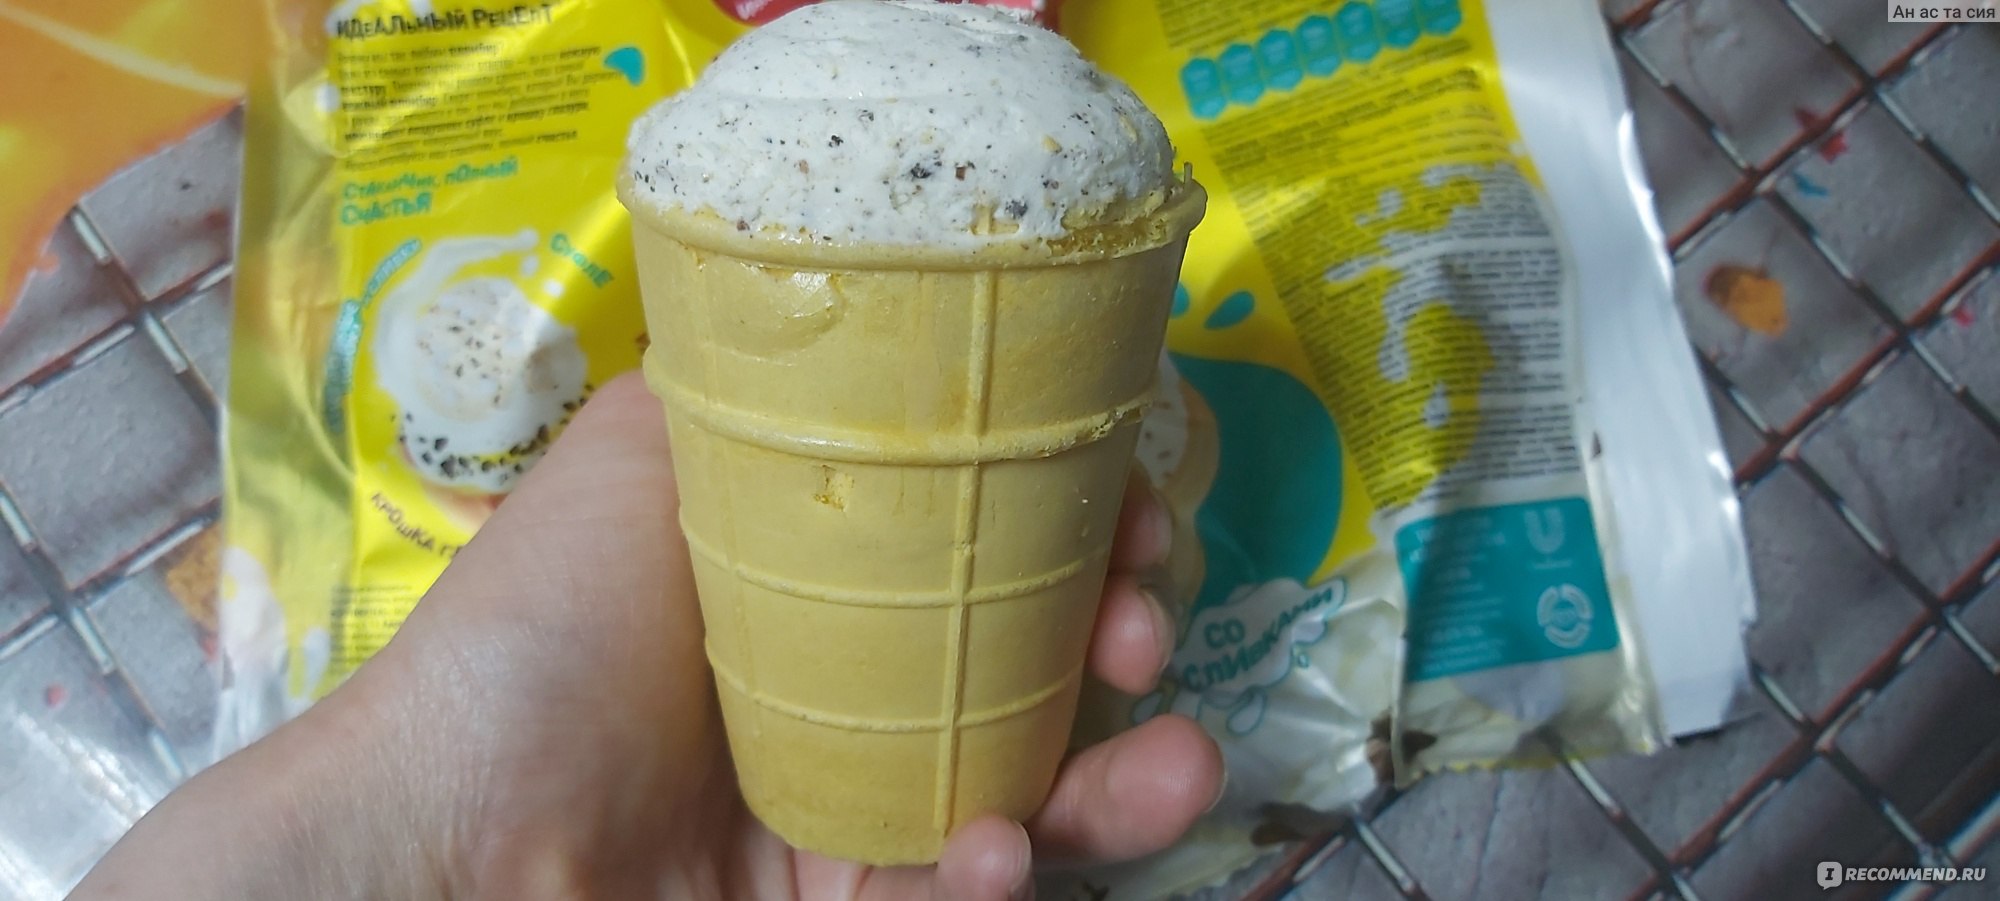 Мороженое Рязаночка